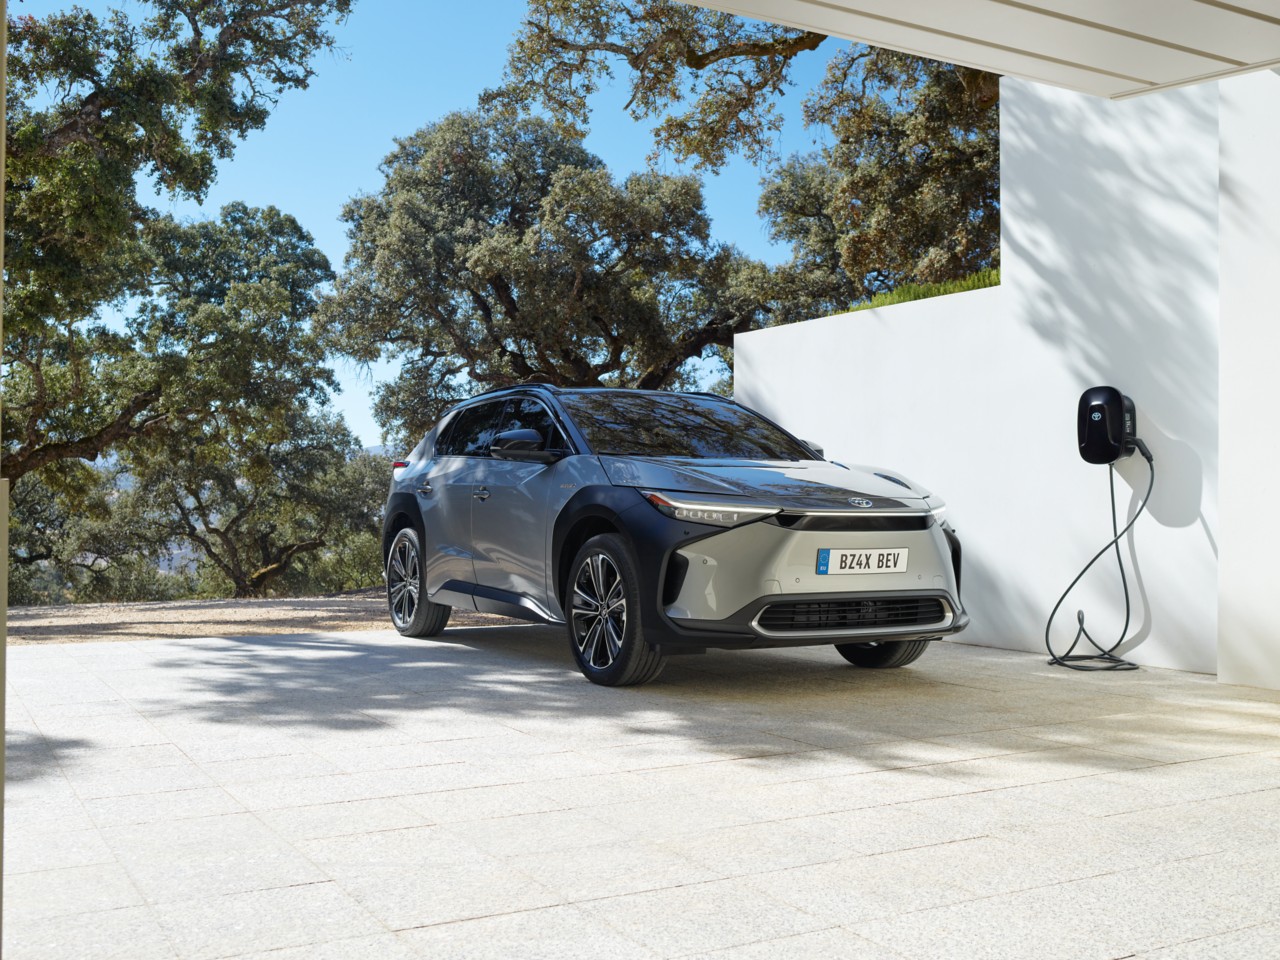 Cargar tu eléctrico Toyota desde casa